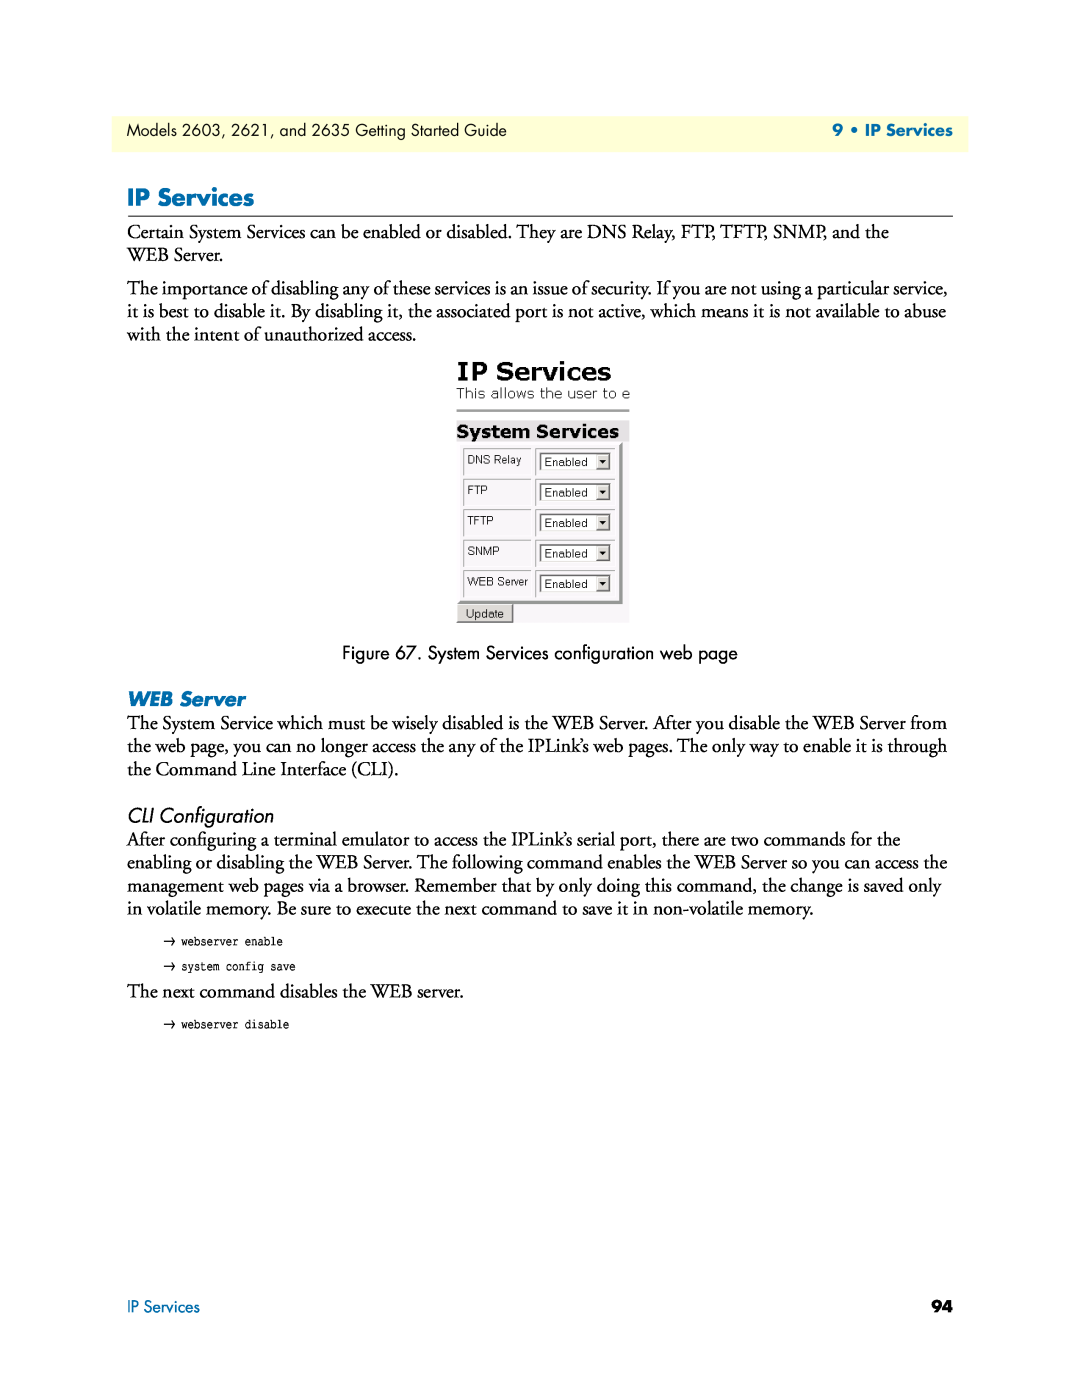 Patton electronic 2621, 2635 manual IP Services, WEB Server, CLI Conﬁguration 